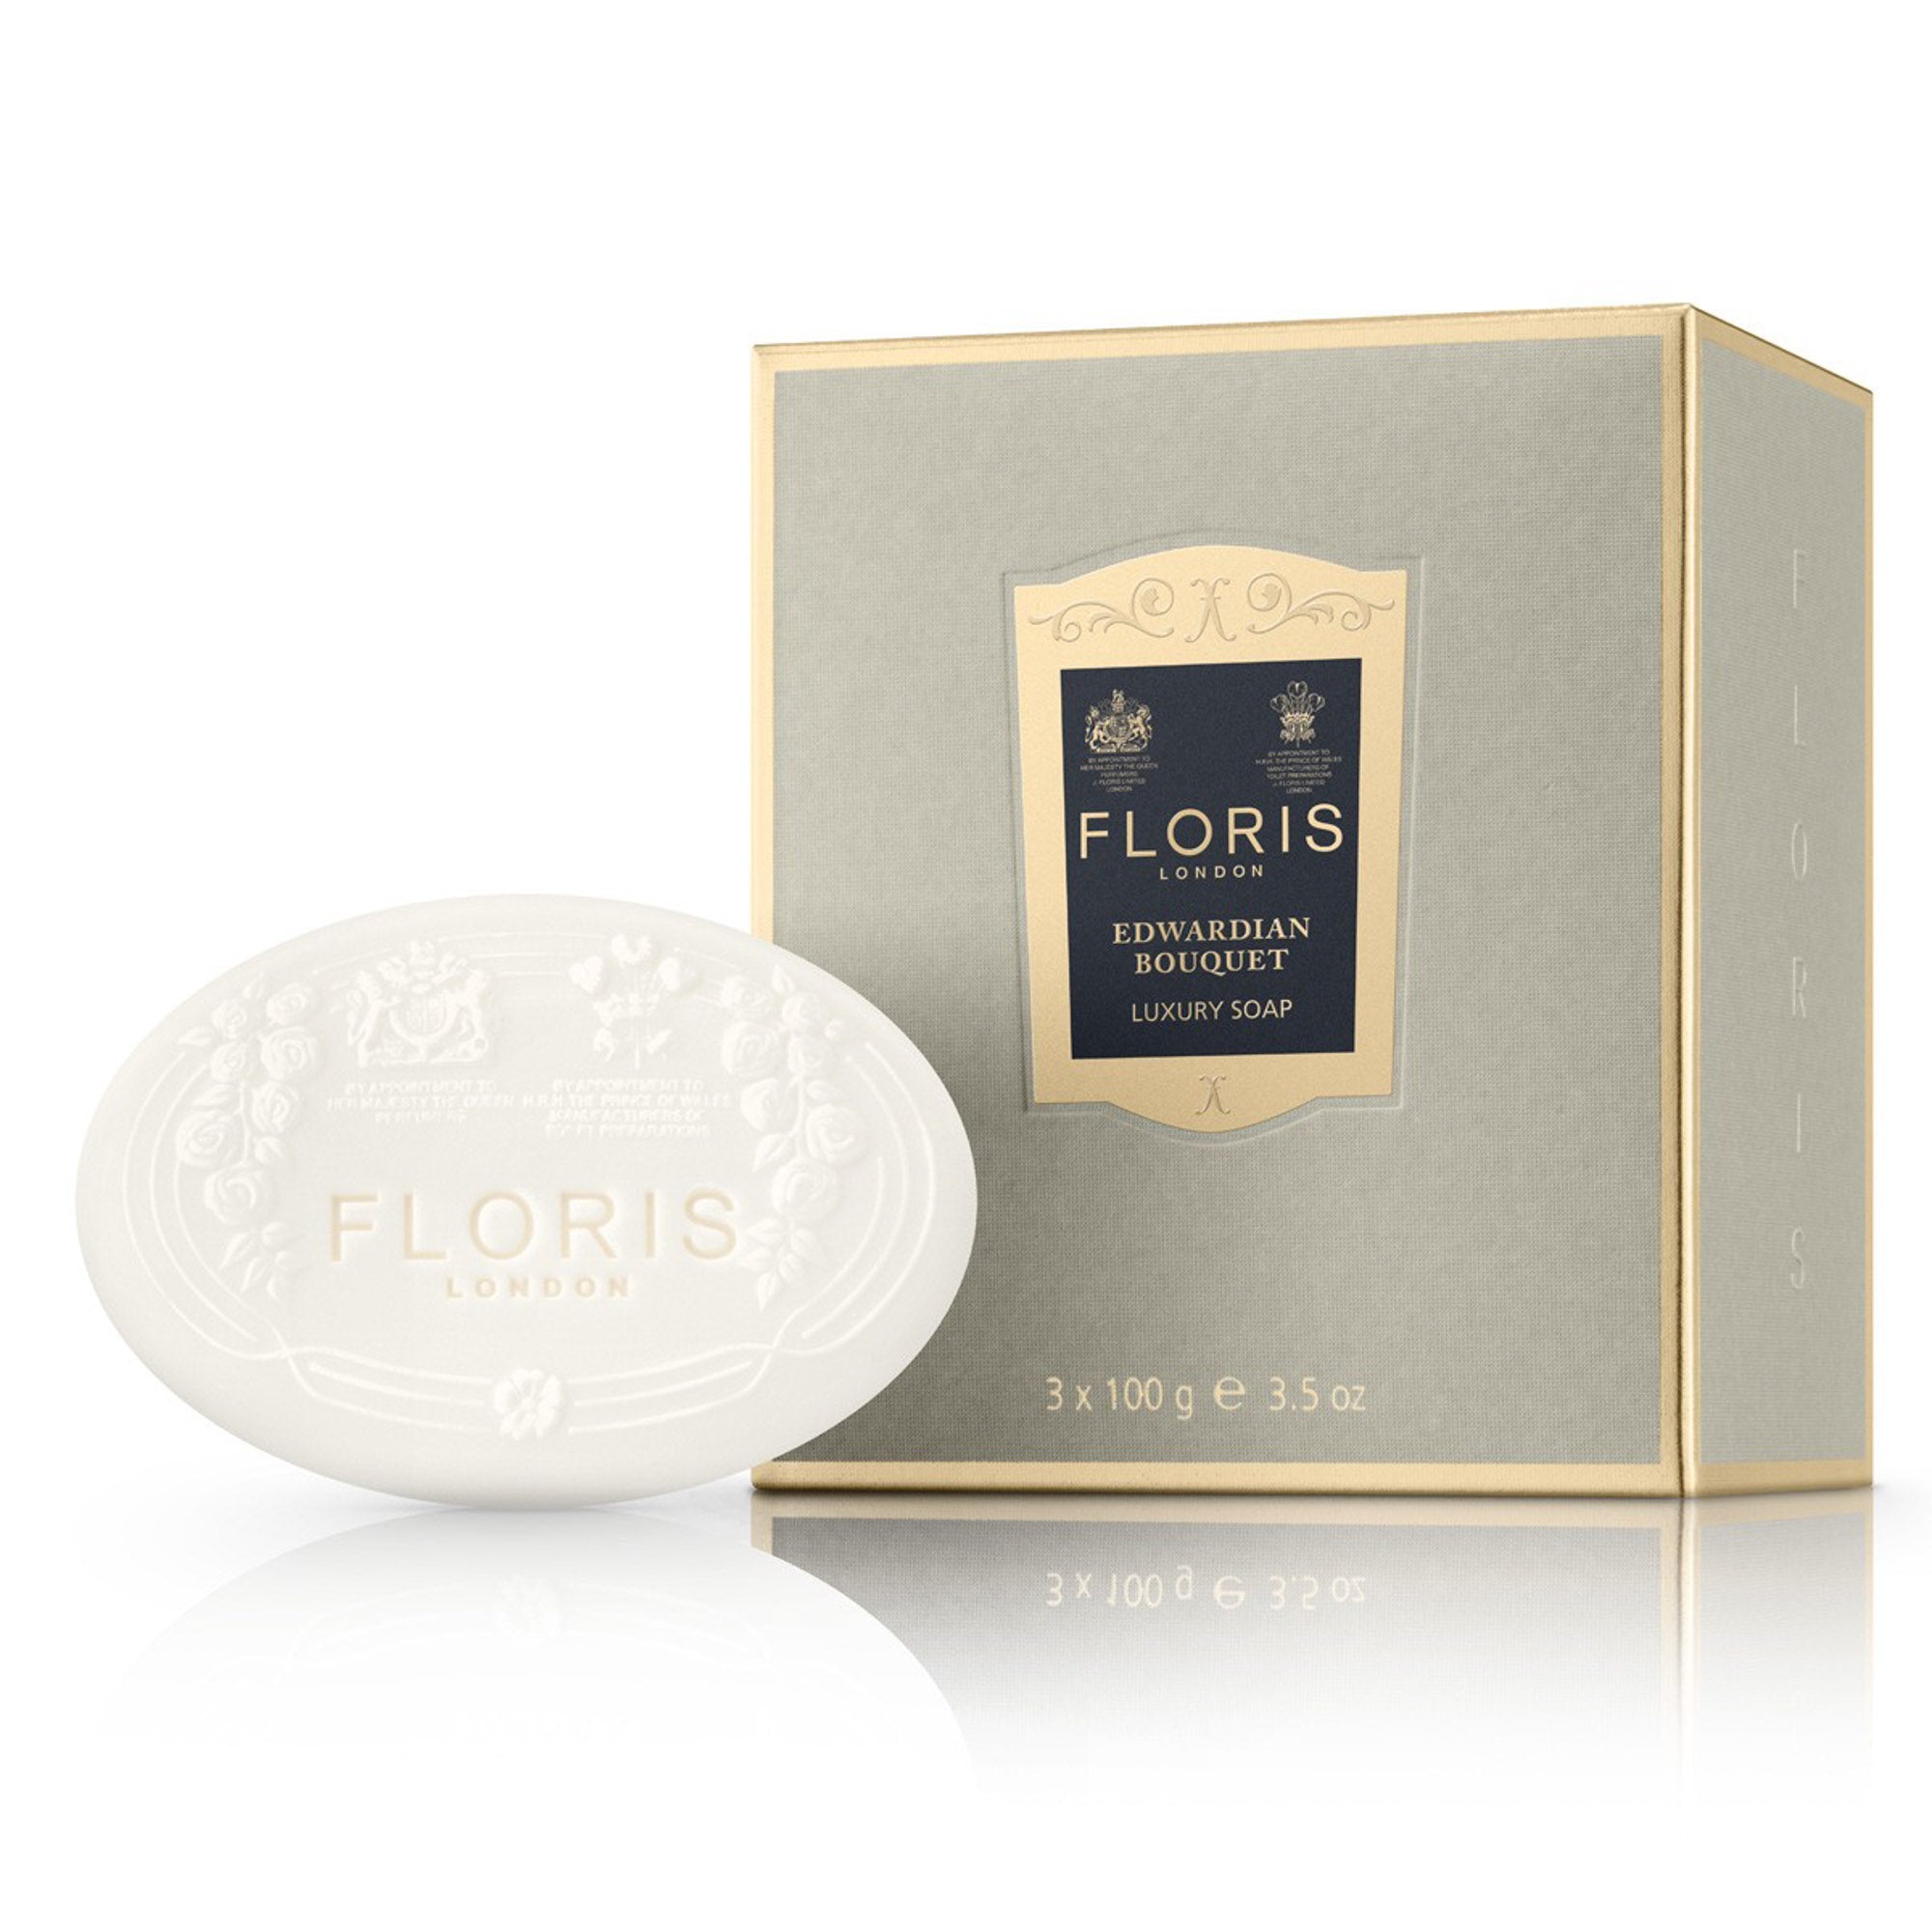 FLORIS Edwardian Bouquet Luxury Soap